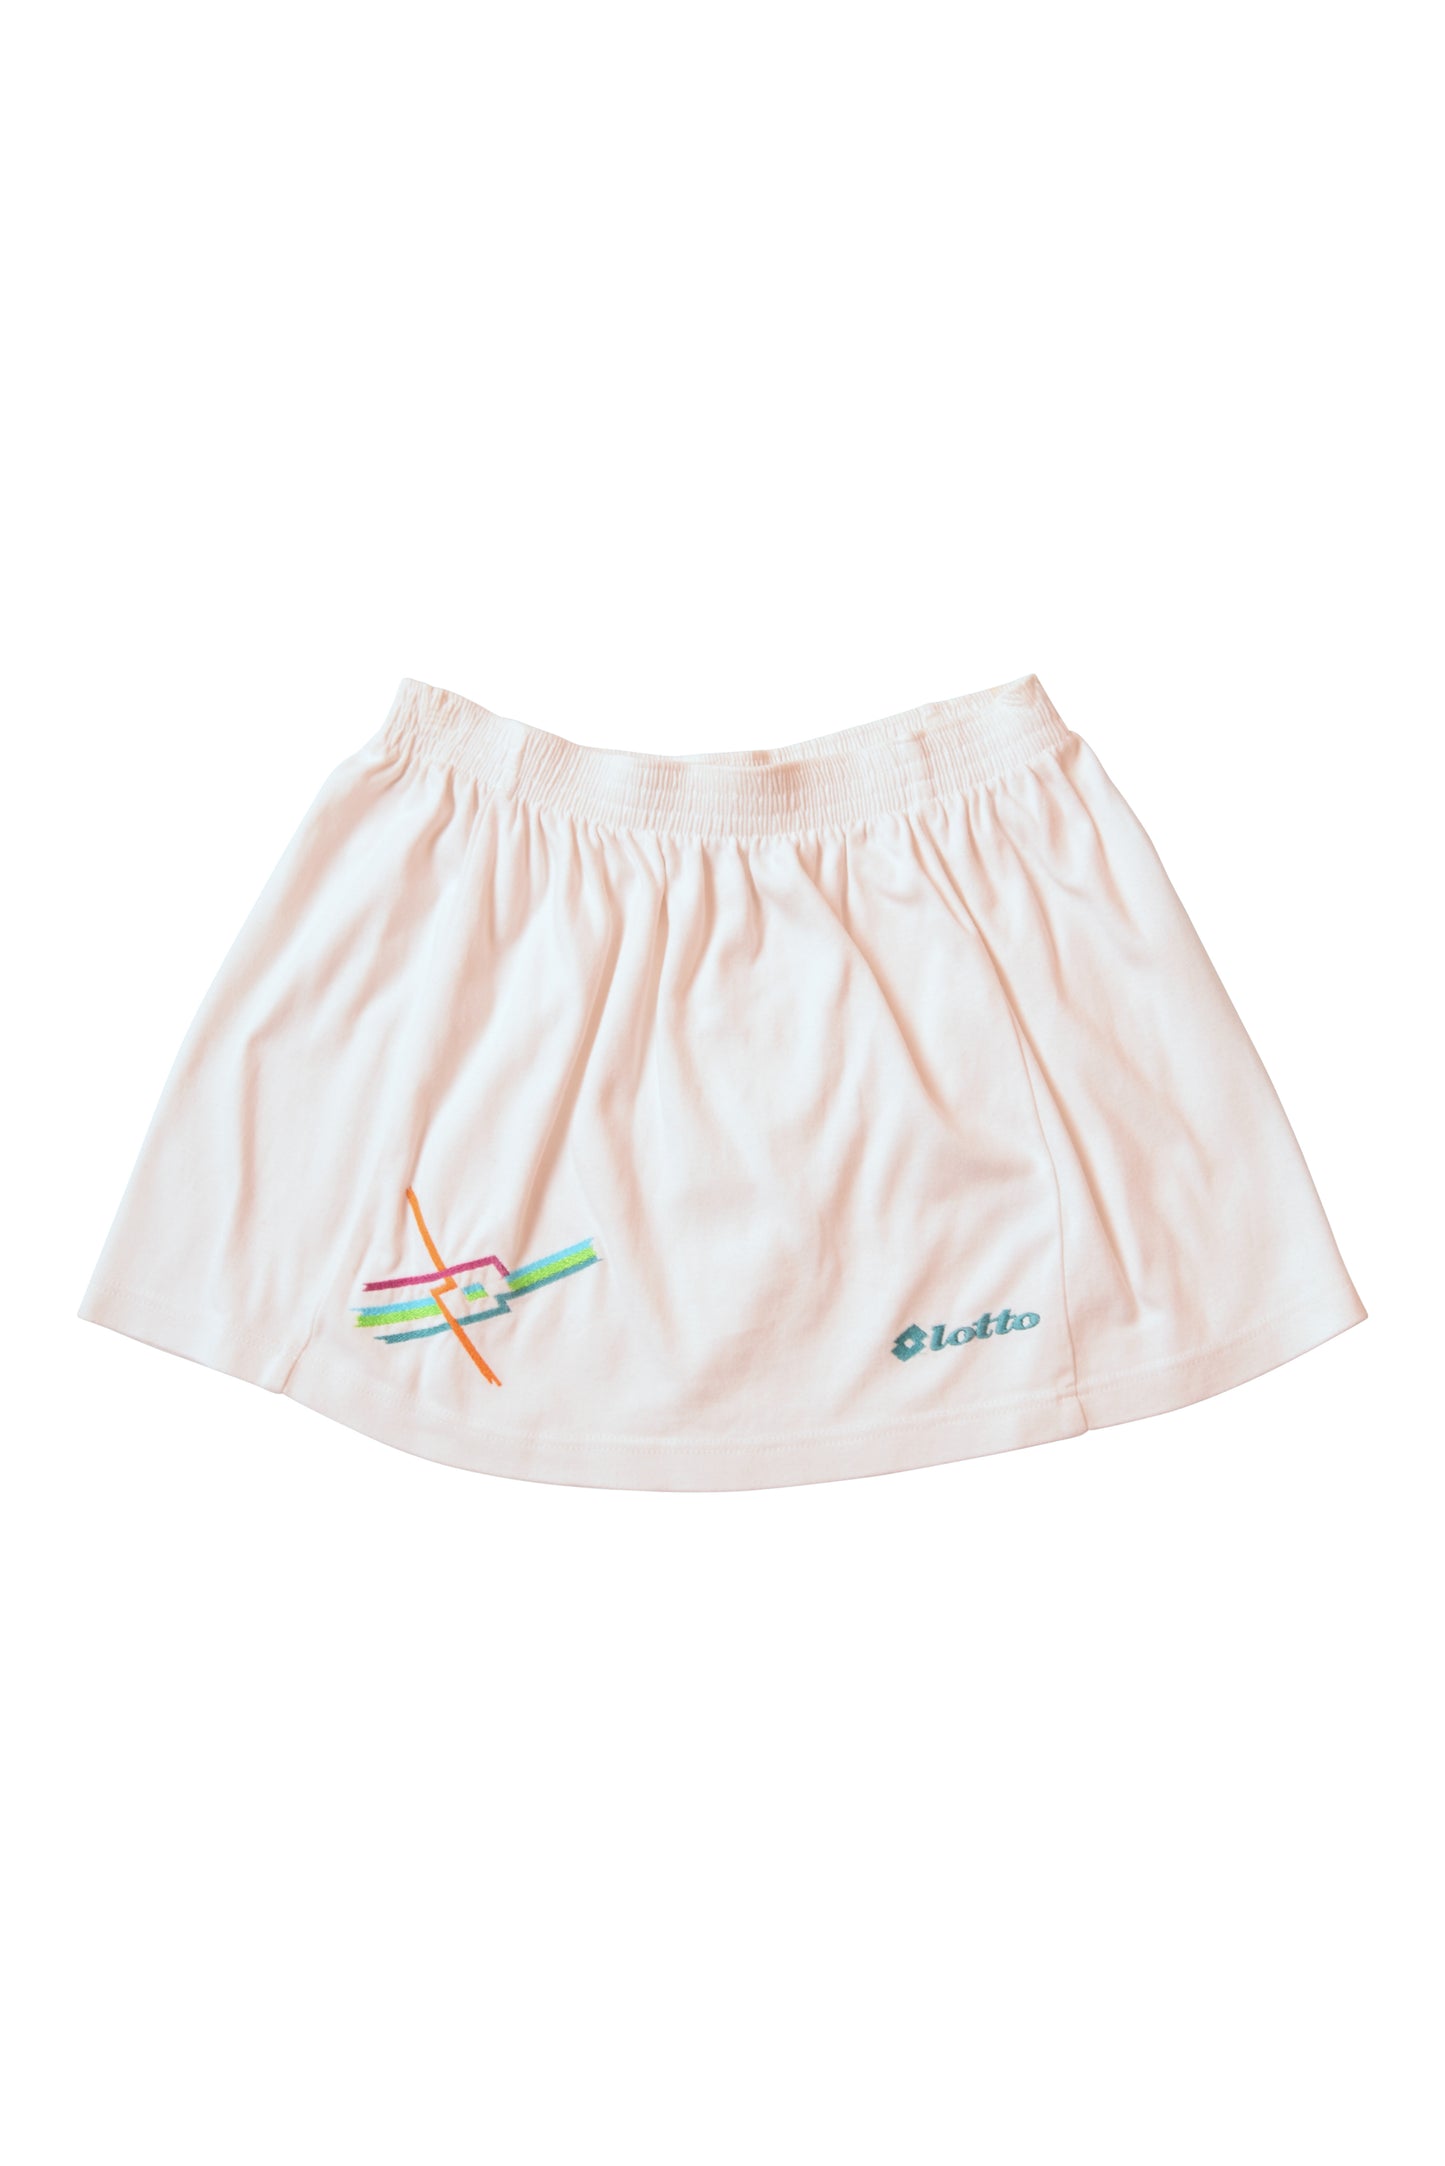 Vintage Lotto Tennis / Festival Skirt 90's